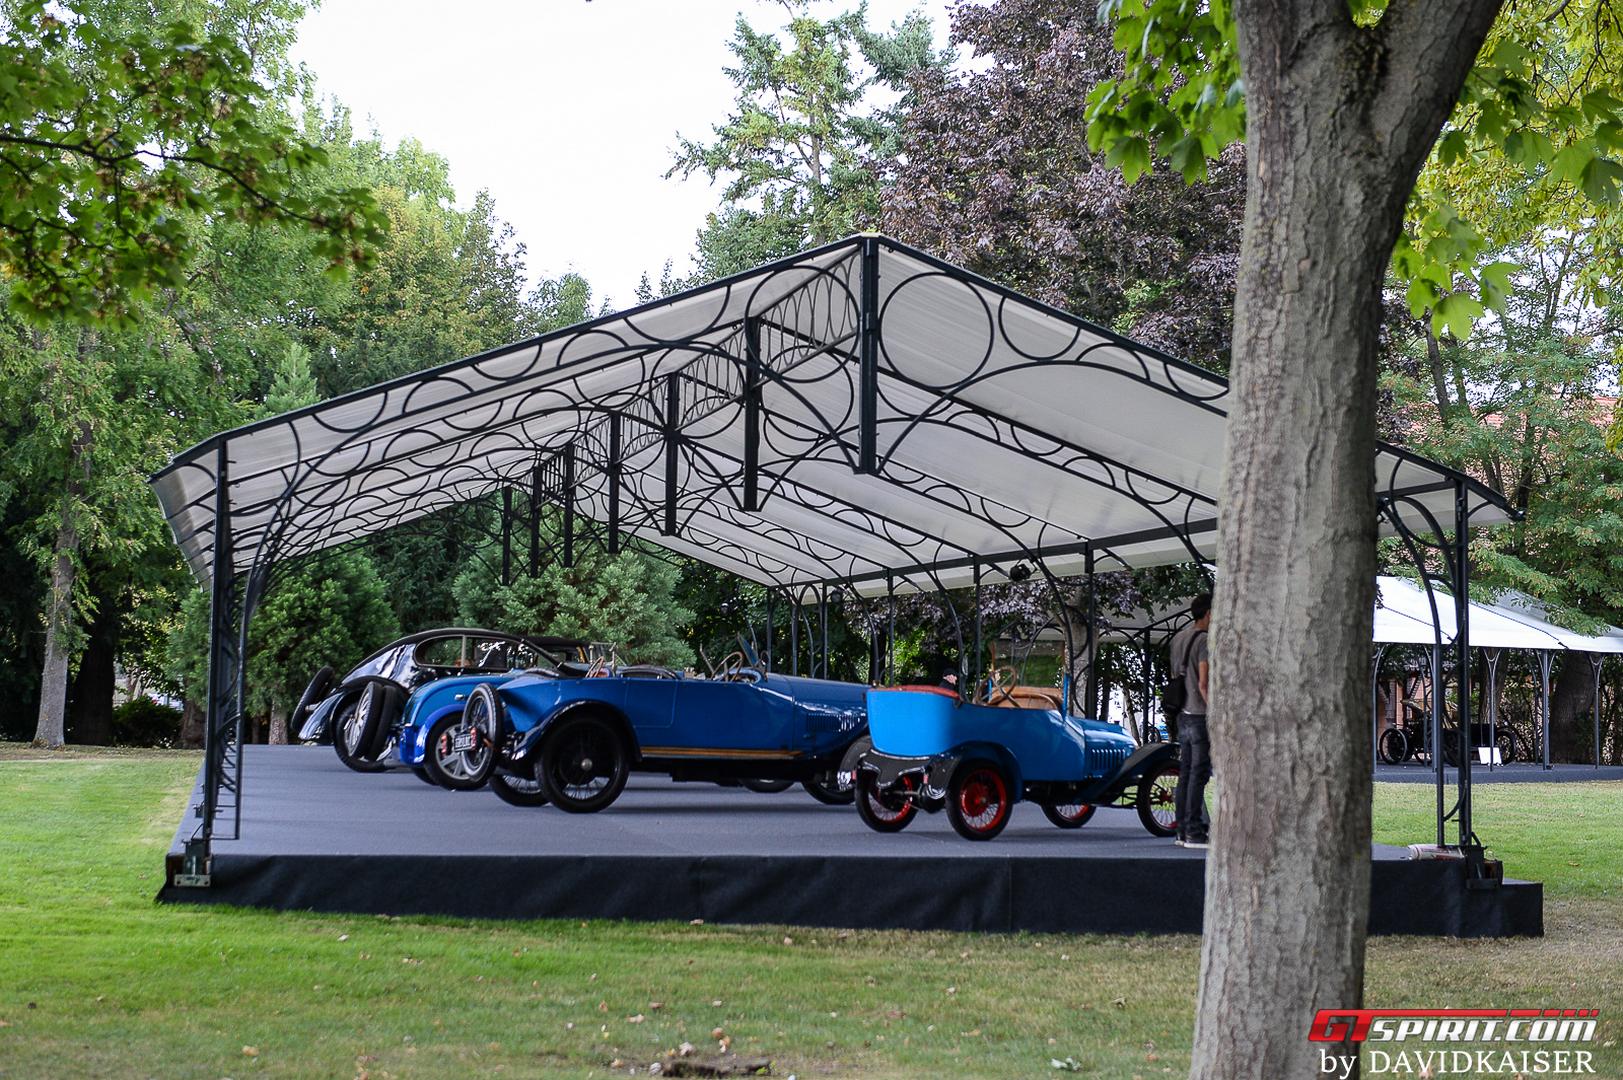 Flashback to the Grande Fête anniversary Bugatti - in GTspirit 110th Molsheim